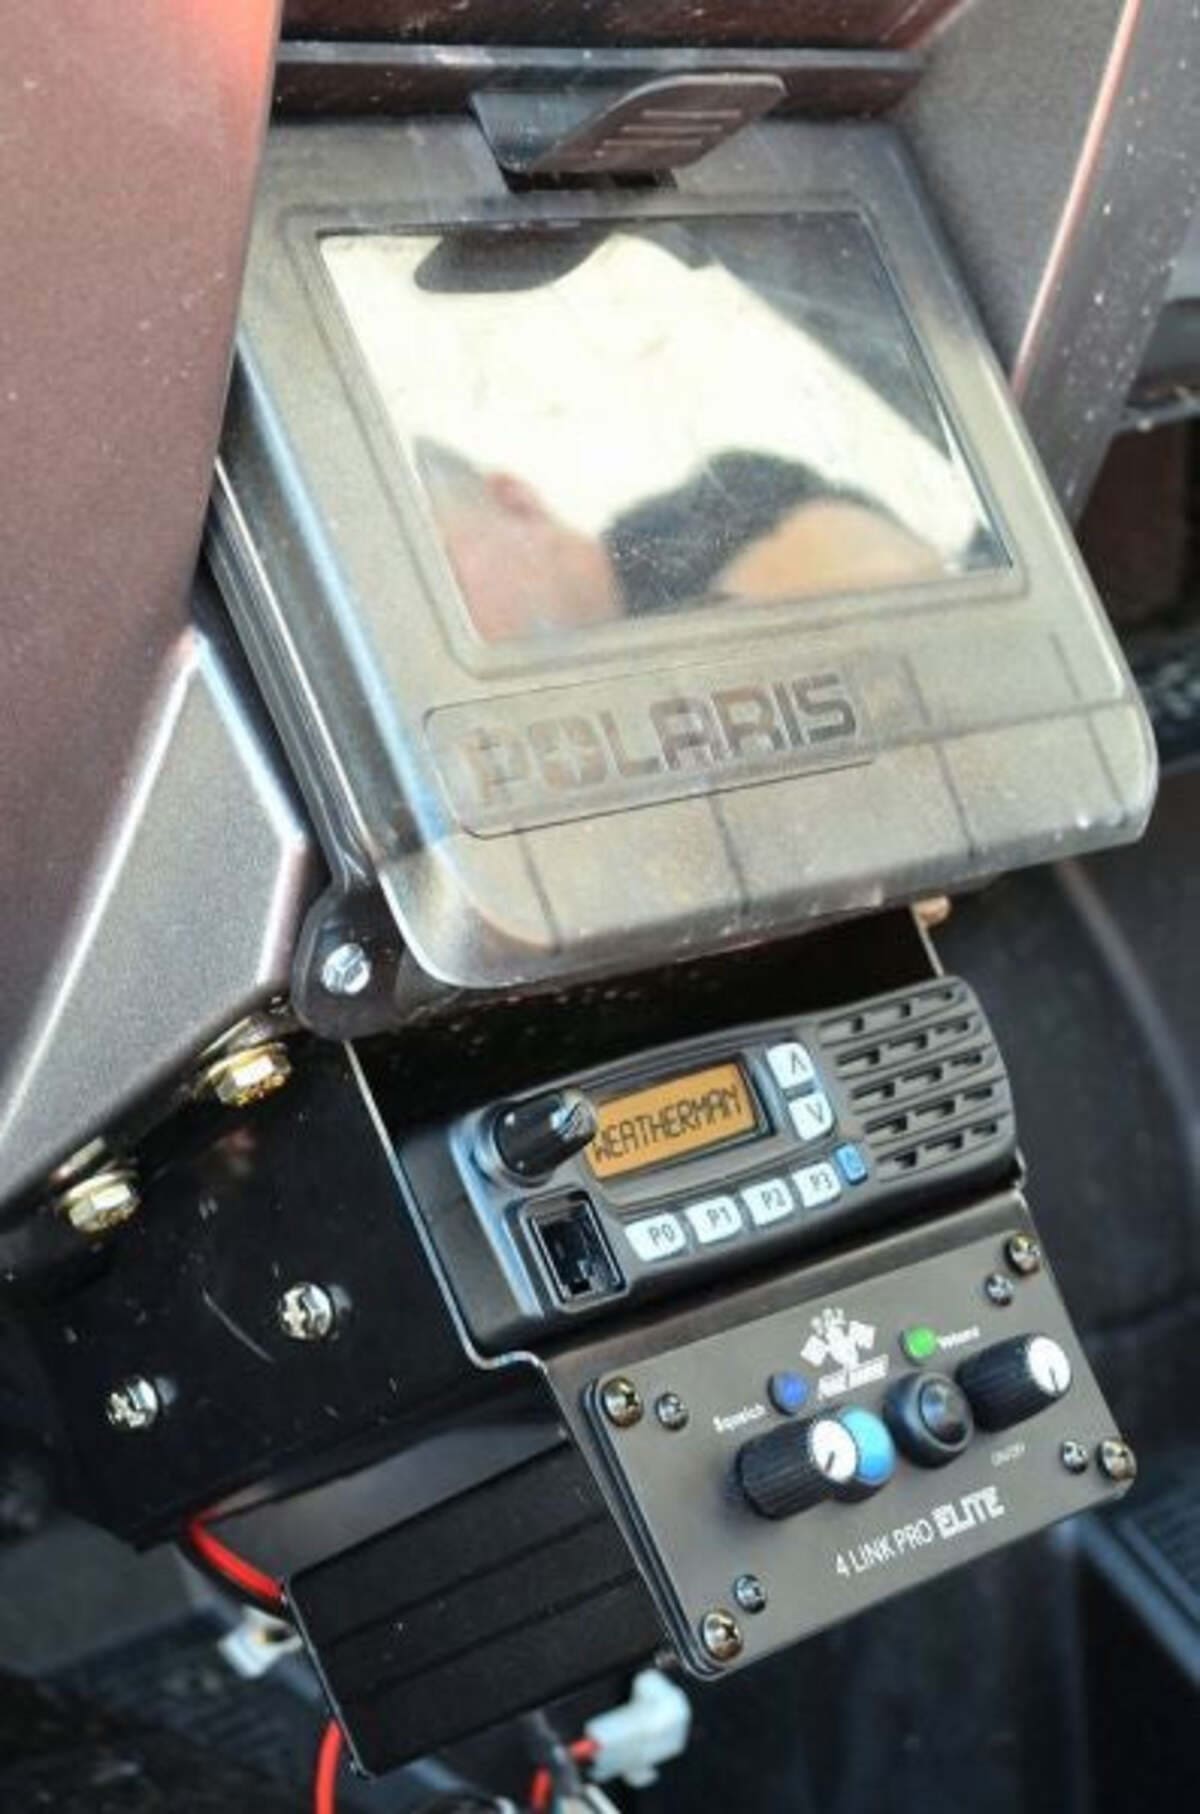 PCI Race Radios Polaris RZR Under Pull Open Box Icom Radio/Intercom Bracket